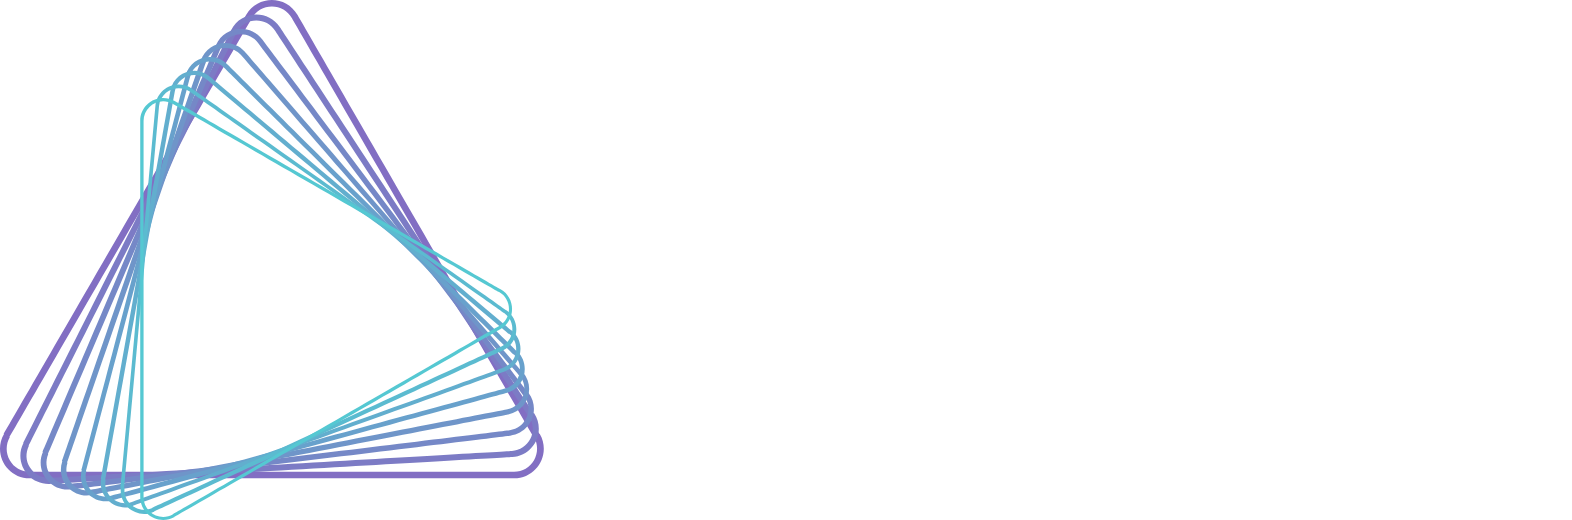 Azenta logo grand pour les fonds sombres (PNG transparent)